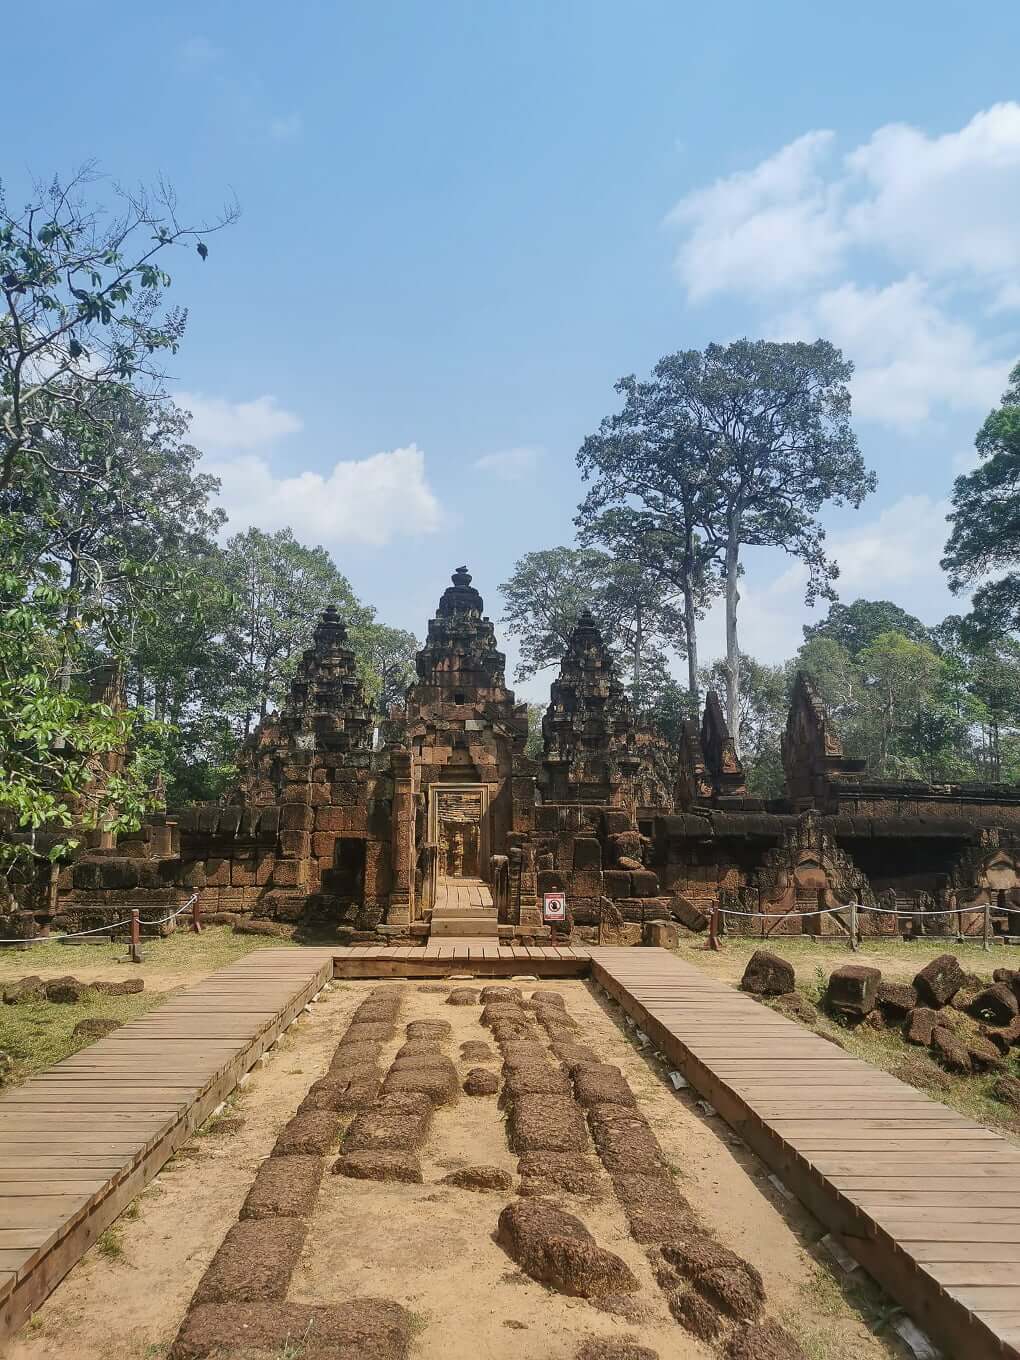 Cambodia-Itinerary-13-Days-Angkor-Wat-Siem-Reap-Banteay-Srei-Siem-Reap-1.jpeg